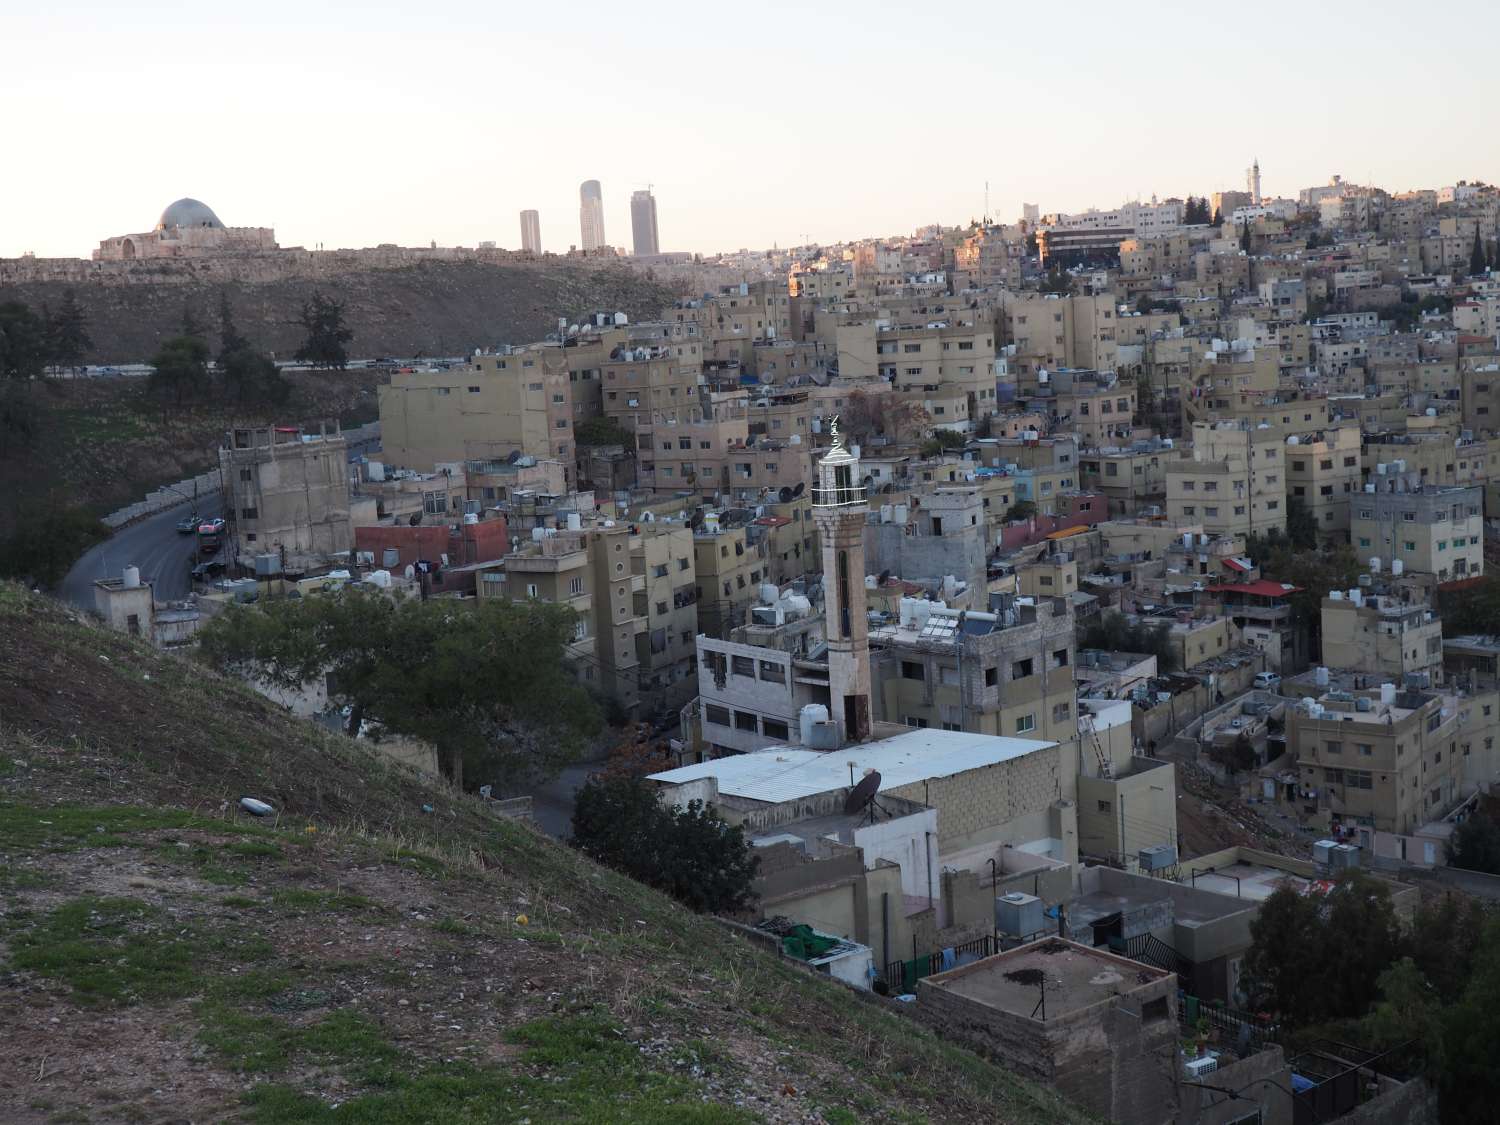 General view of Amman westward toward the Umayyad citadel